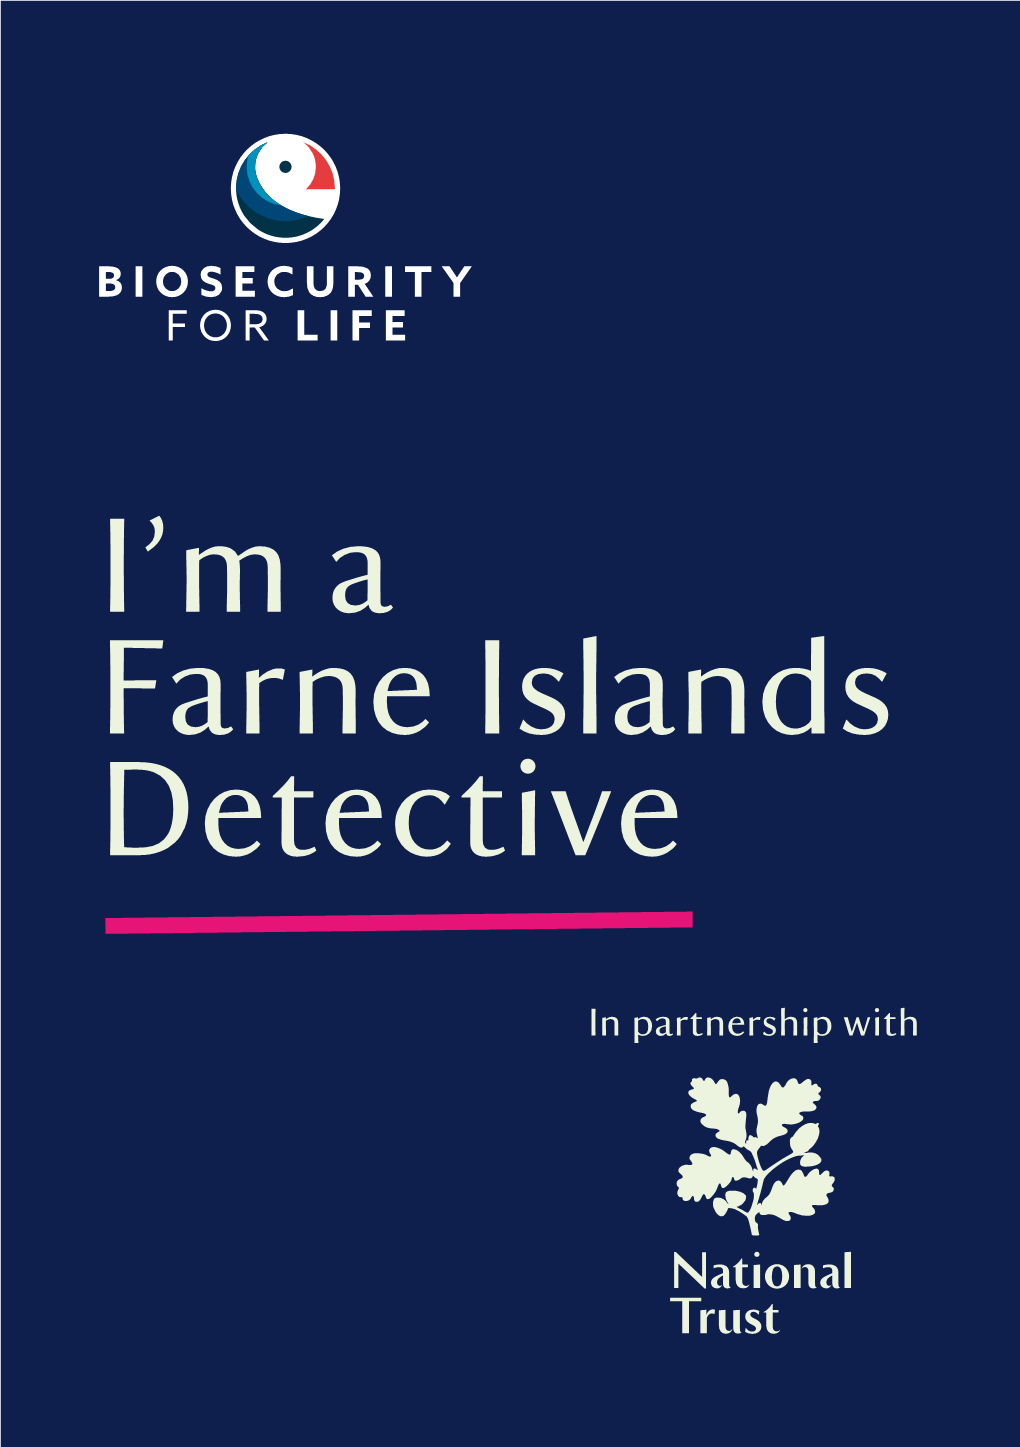 Farne Islands Detective